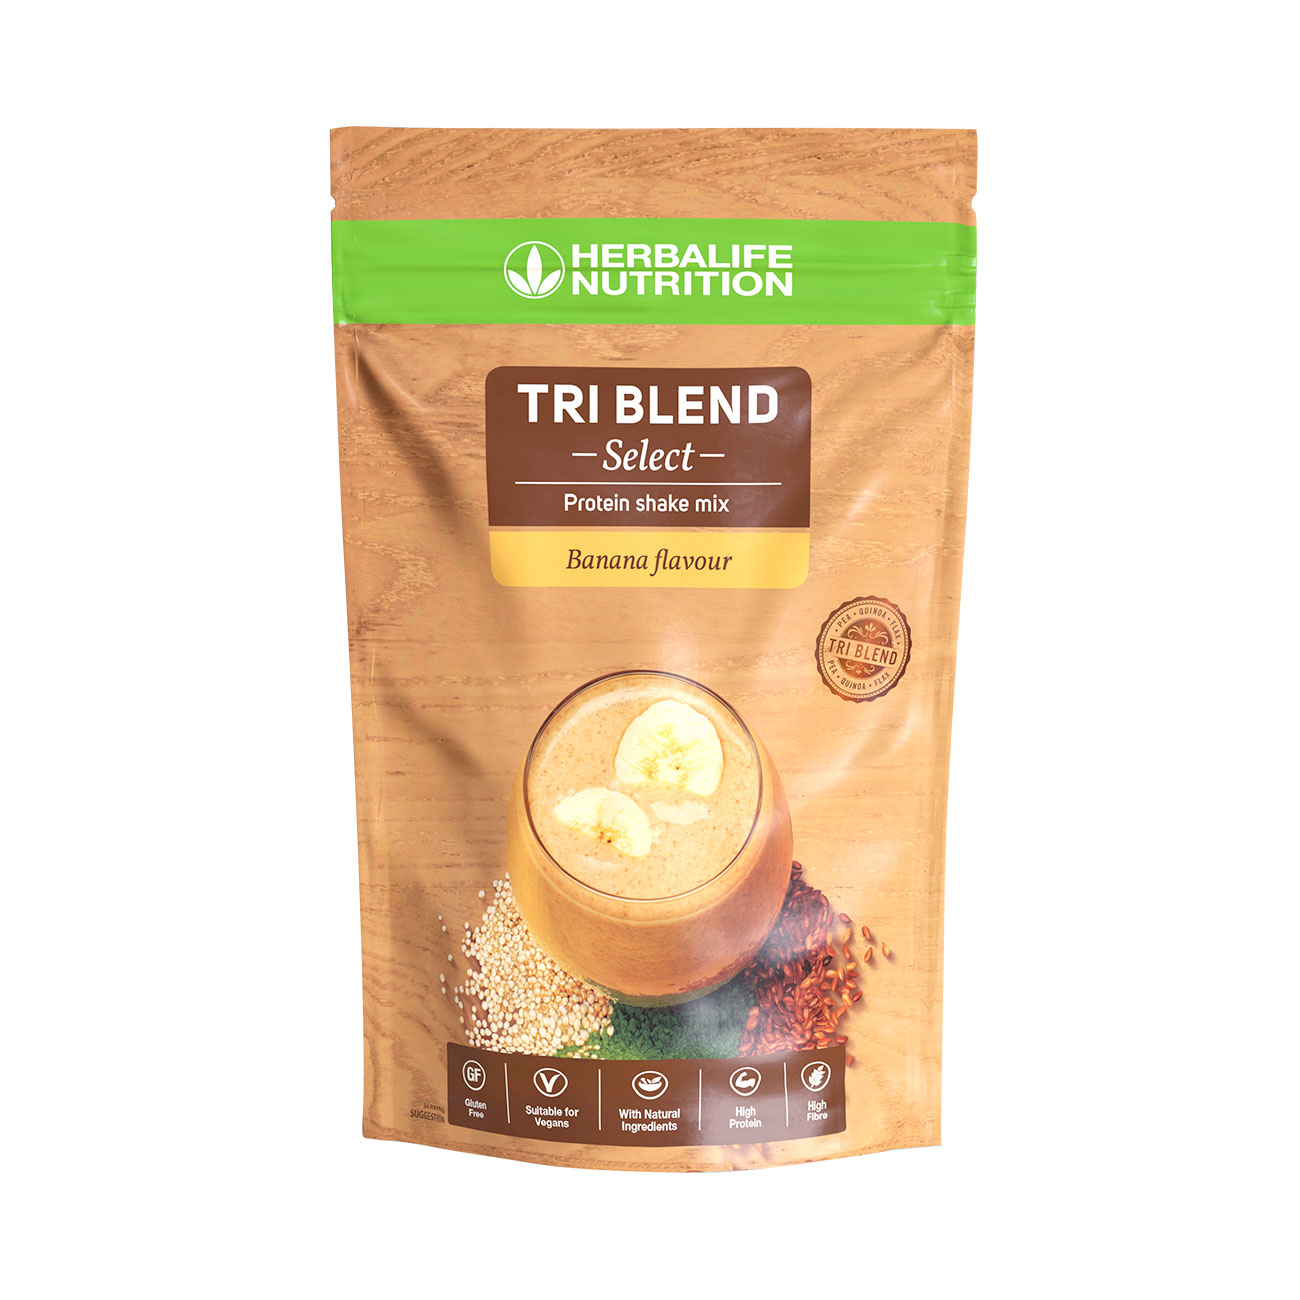 Tri Blend Select proteïne shake bananensmaak product shot